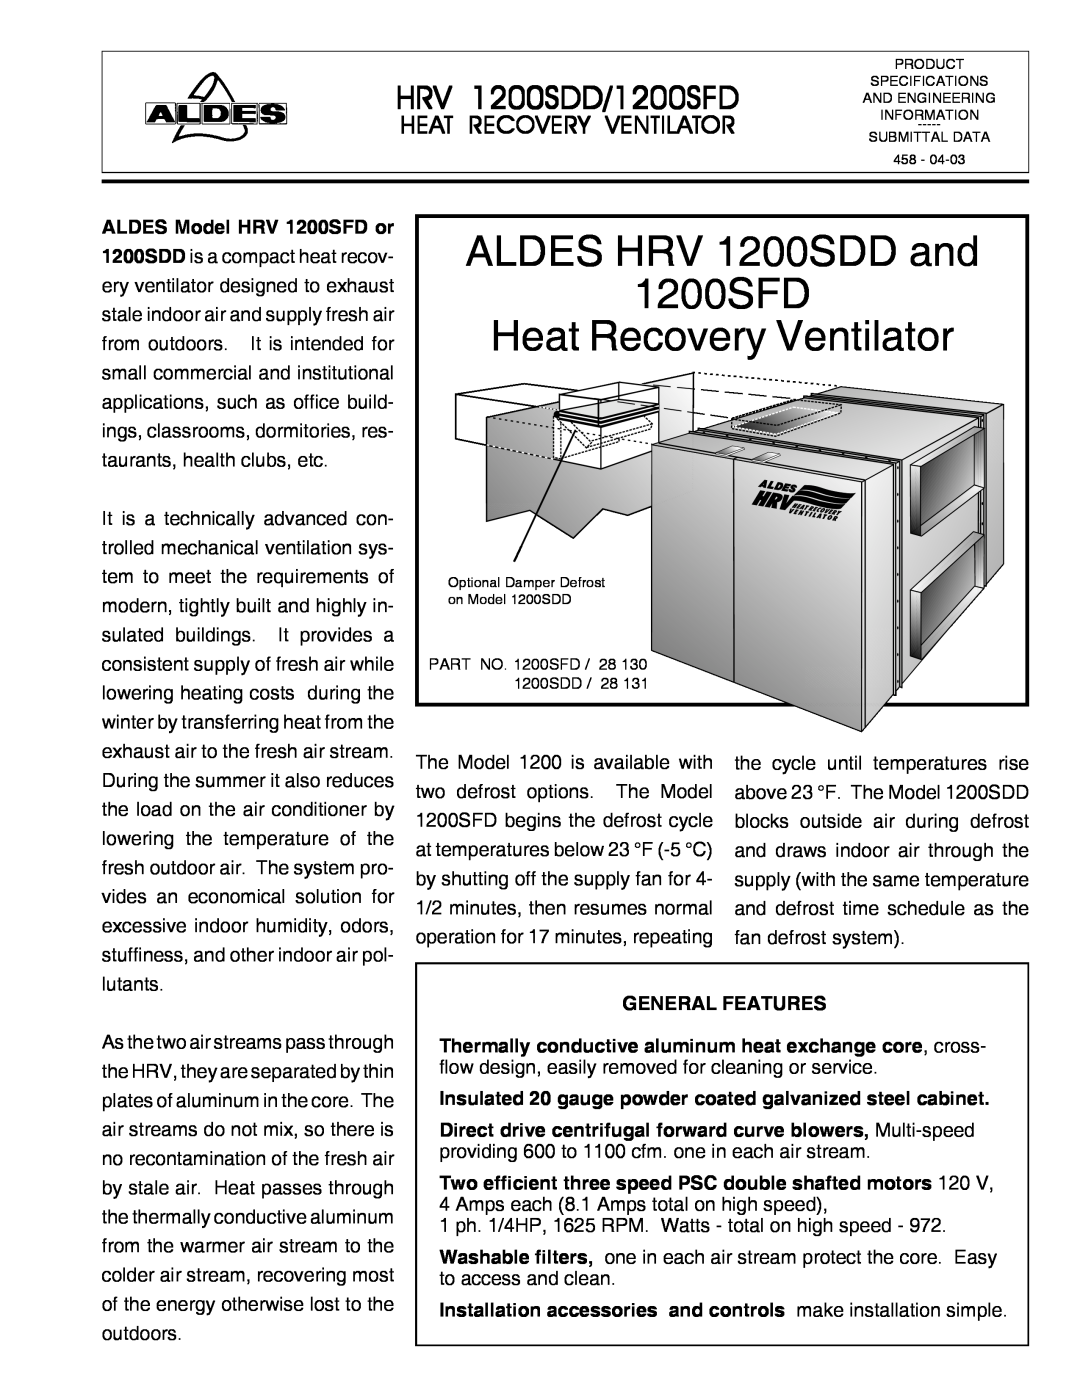 American Aldes HRV 700SDD, HRV 700SFD manual ALDES HRV 1200SDD and, HRV 1200SDD/1200SFD, Heat Recovery Ventilator 